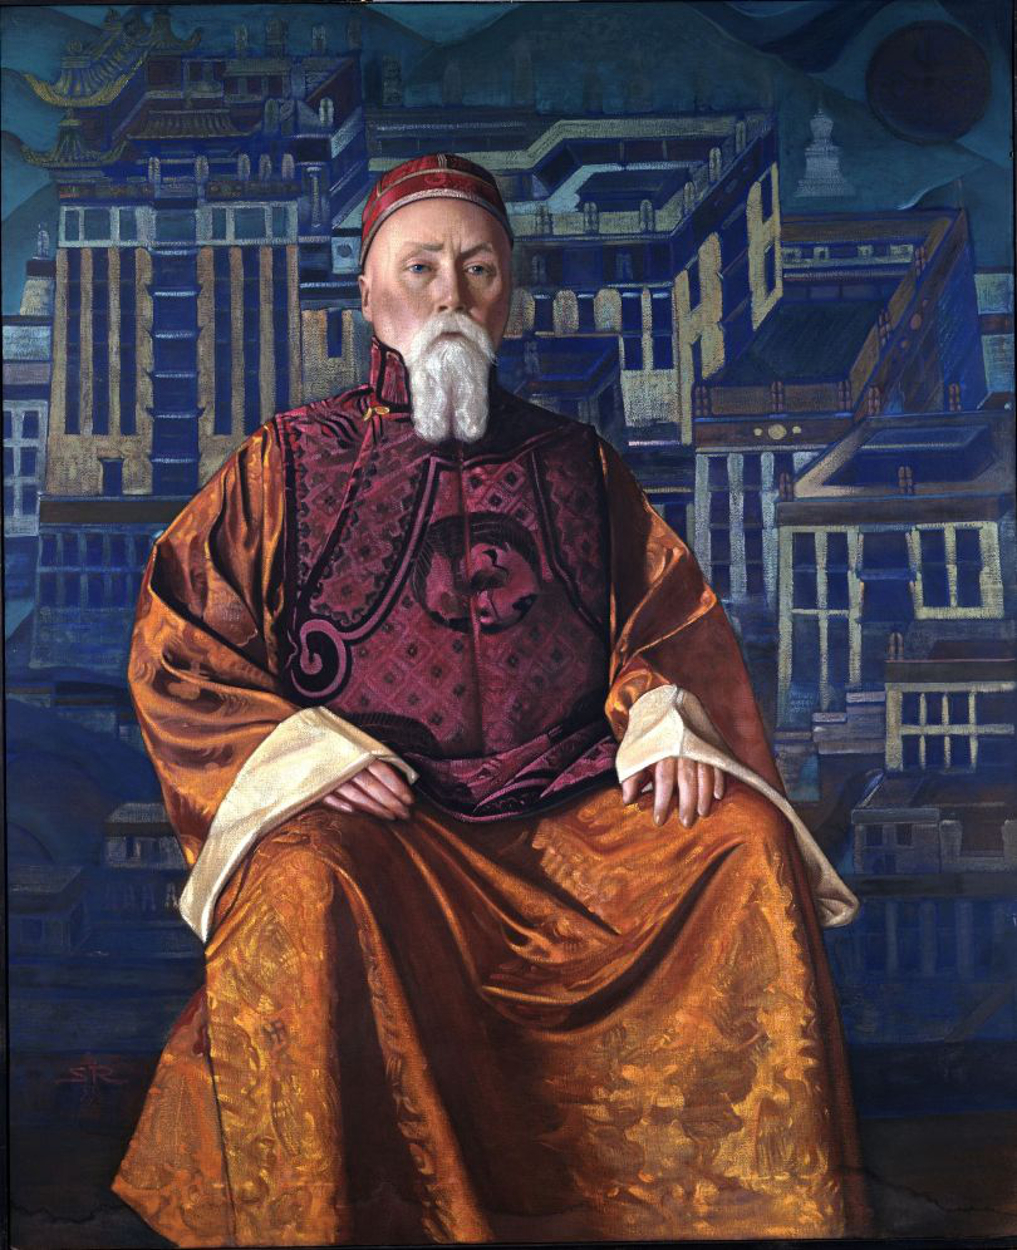 Nicholas Roerich - October 9, 1874 - December 13, 1947